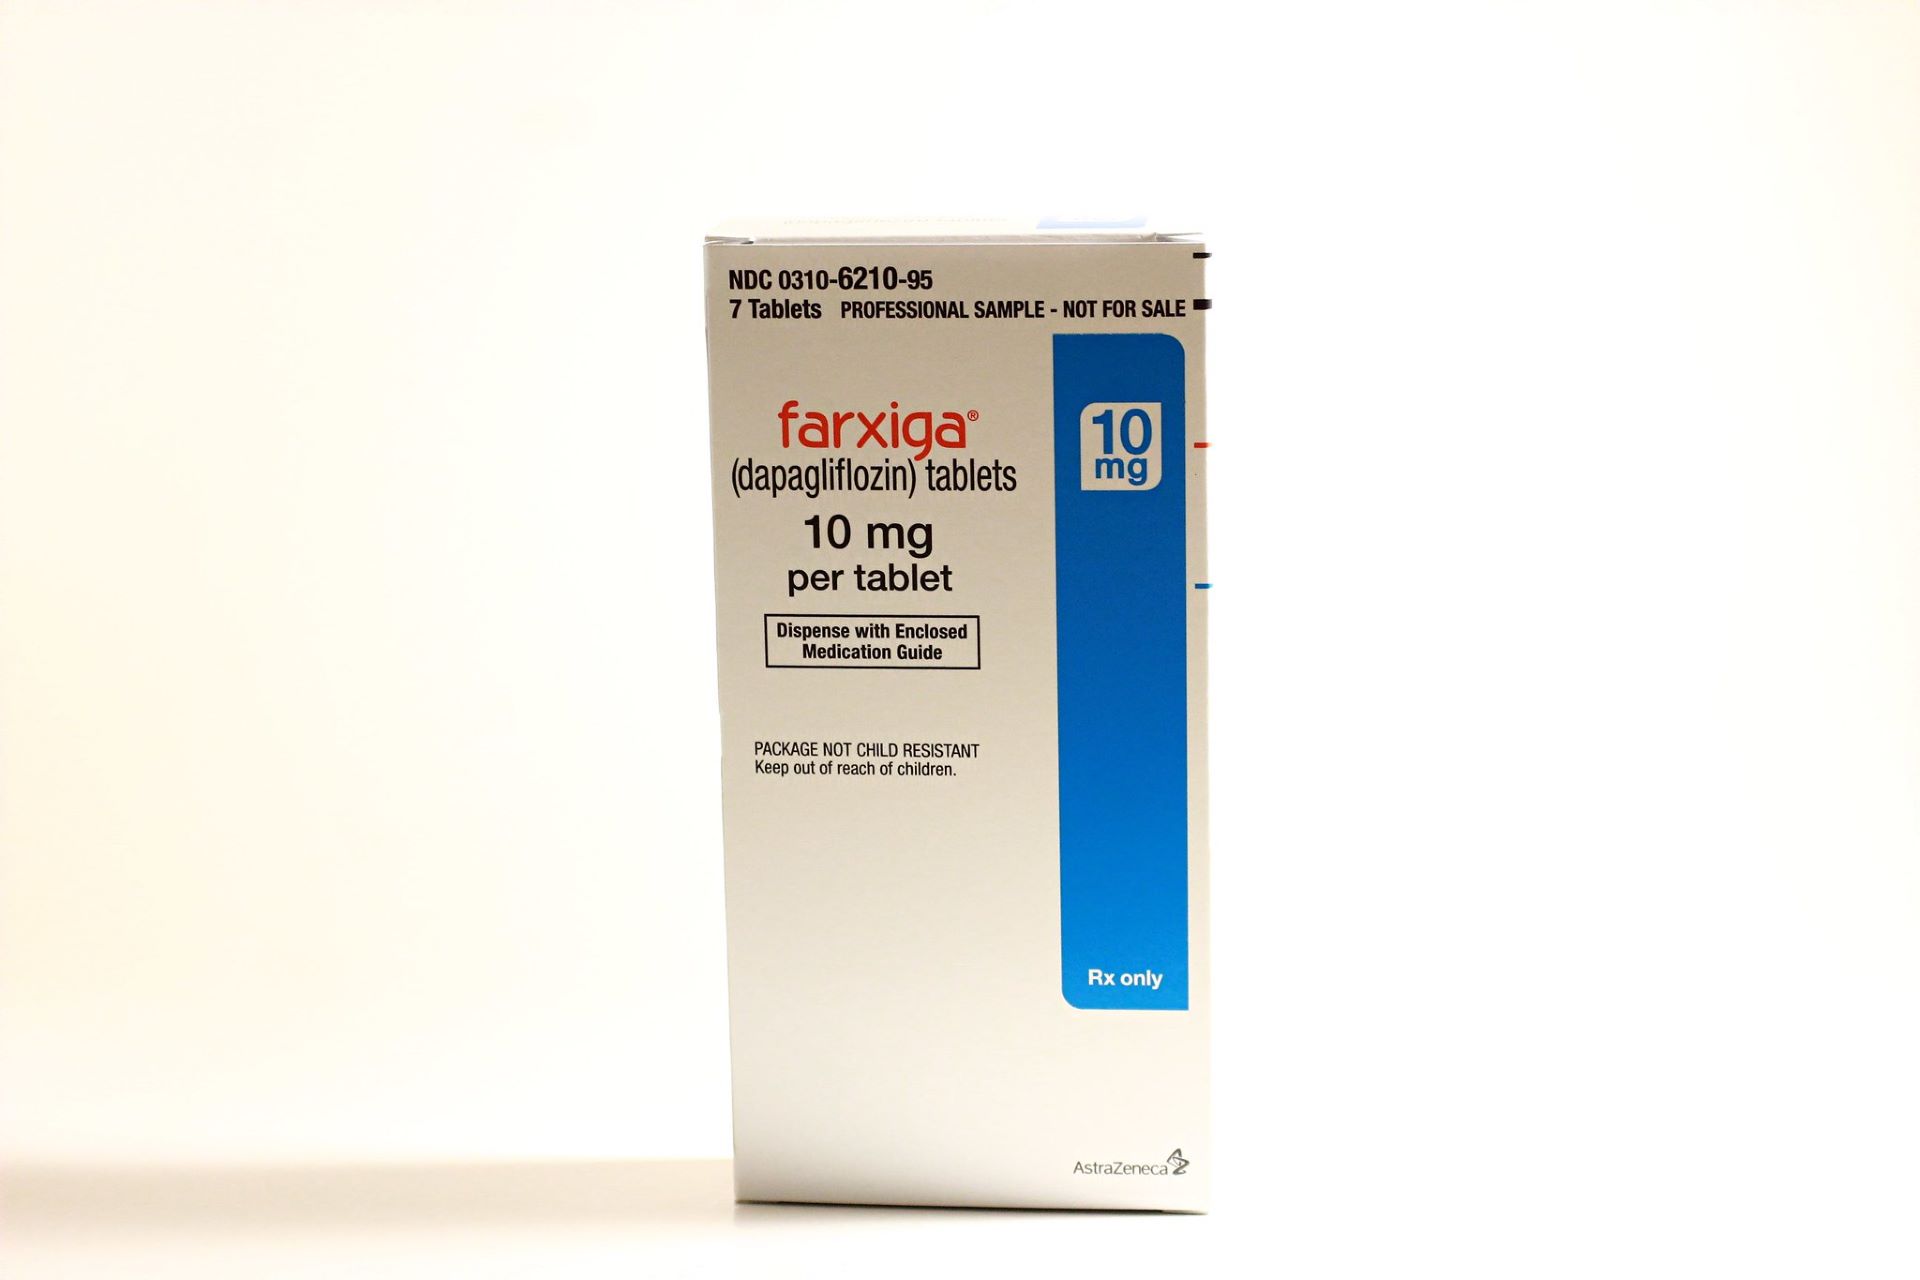 FDA Approves AstraZeneca s Farxiga For Chronic Kidney Disease Treatment